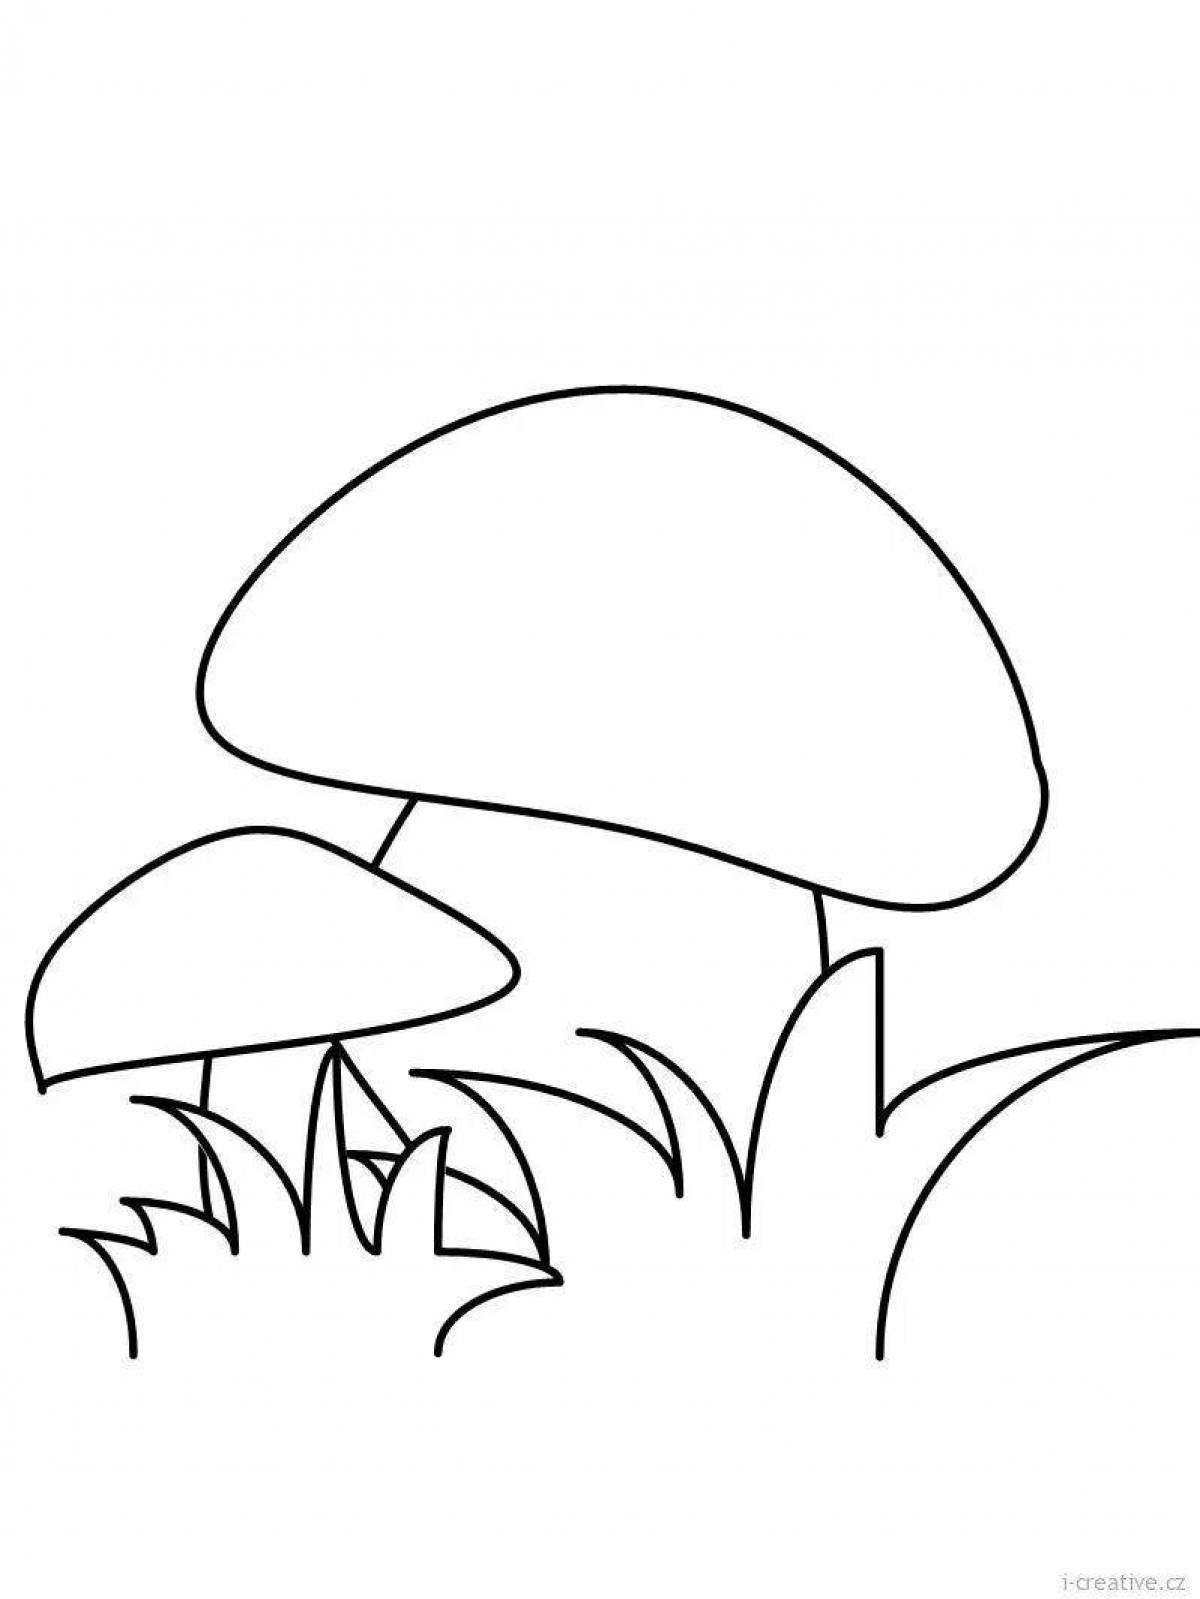 Coloring bright white mushroom